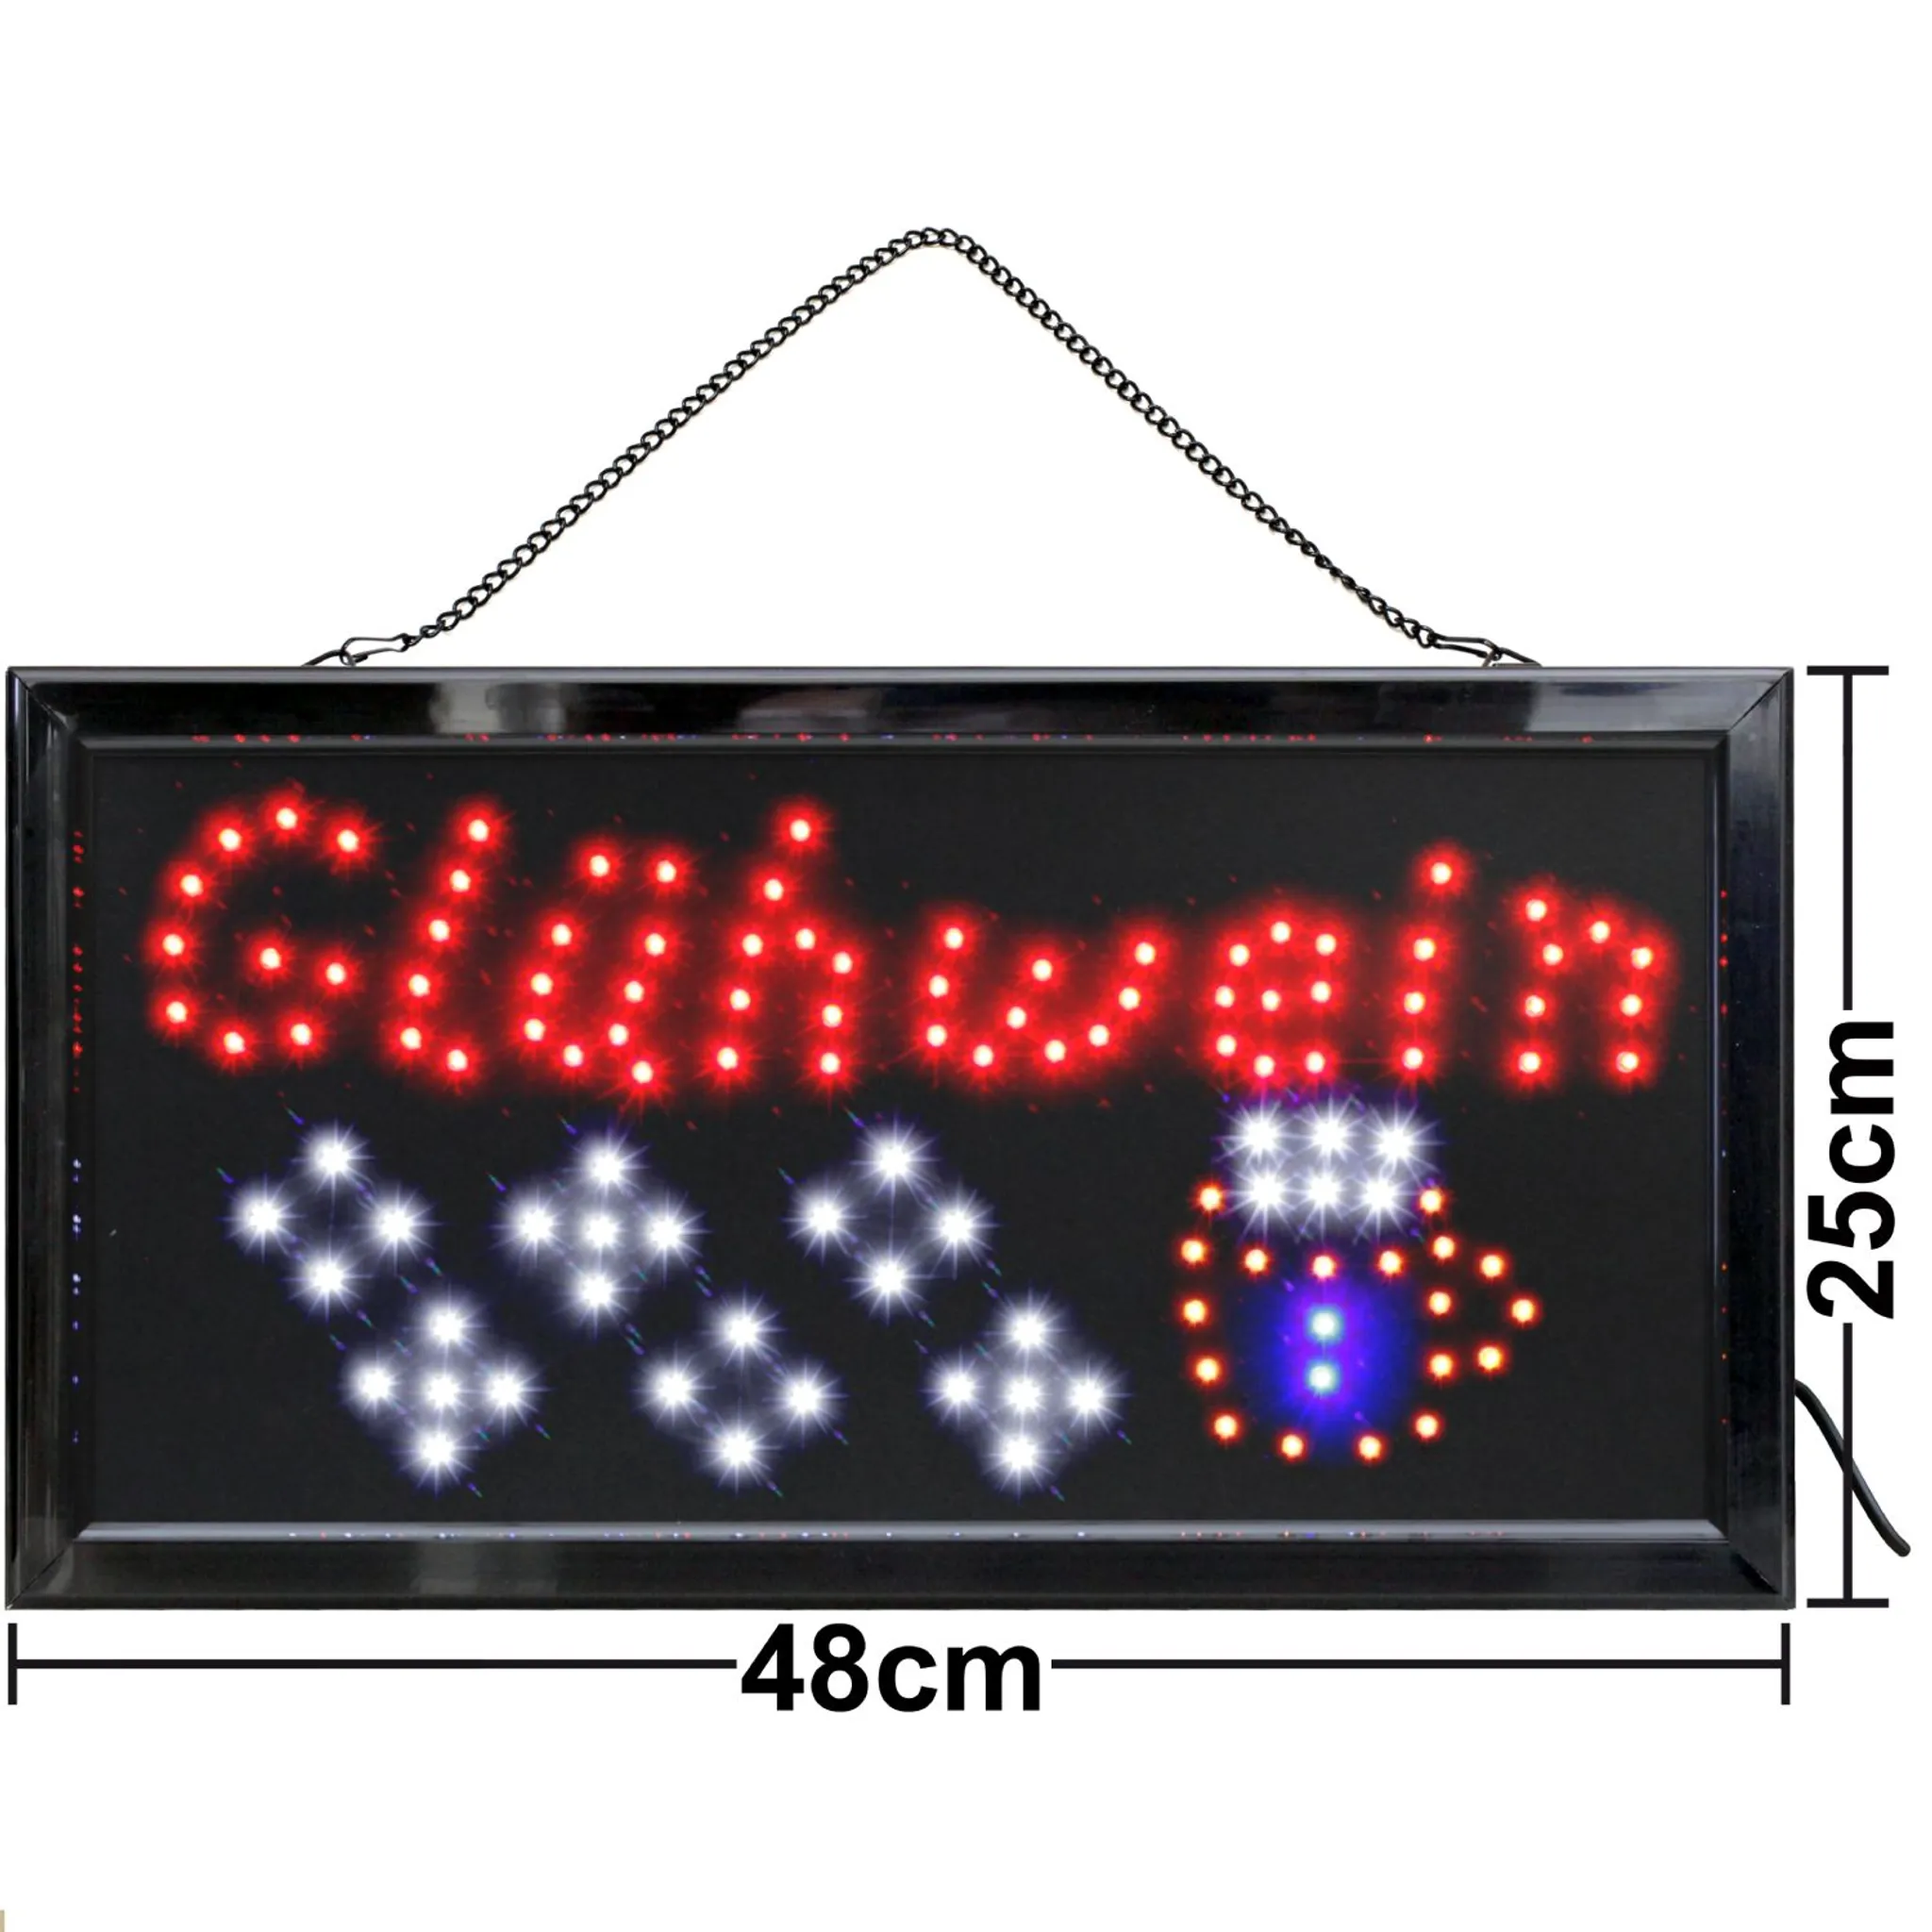 LED-Schild offen 50 x 25 cm  Einzigartige LED-Dekoration